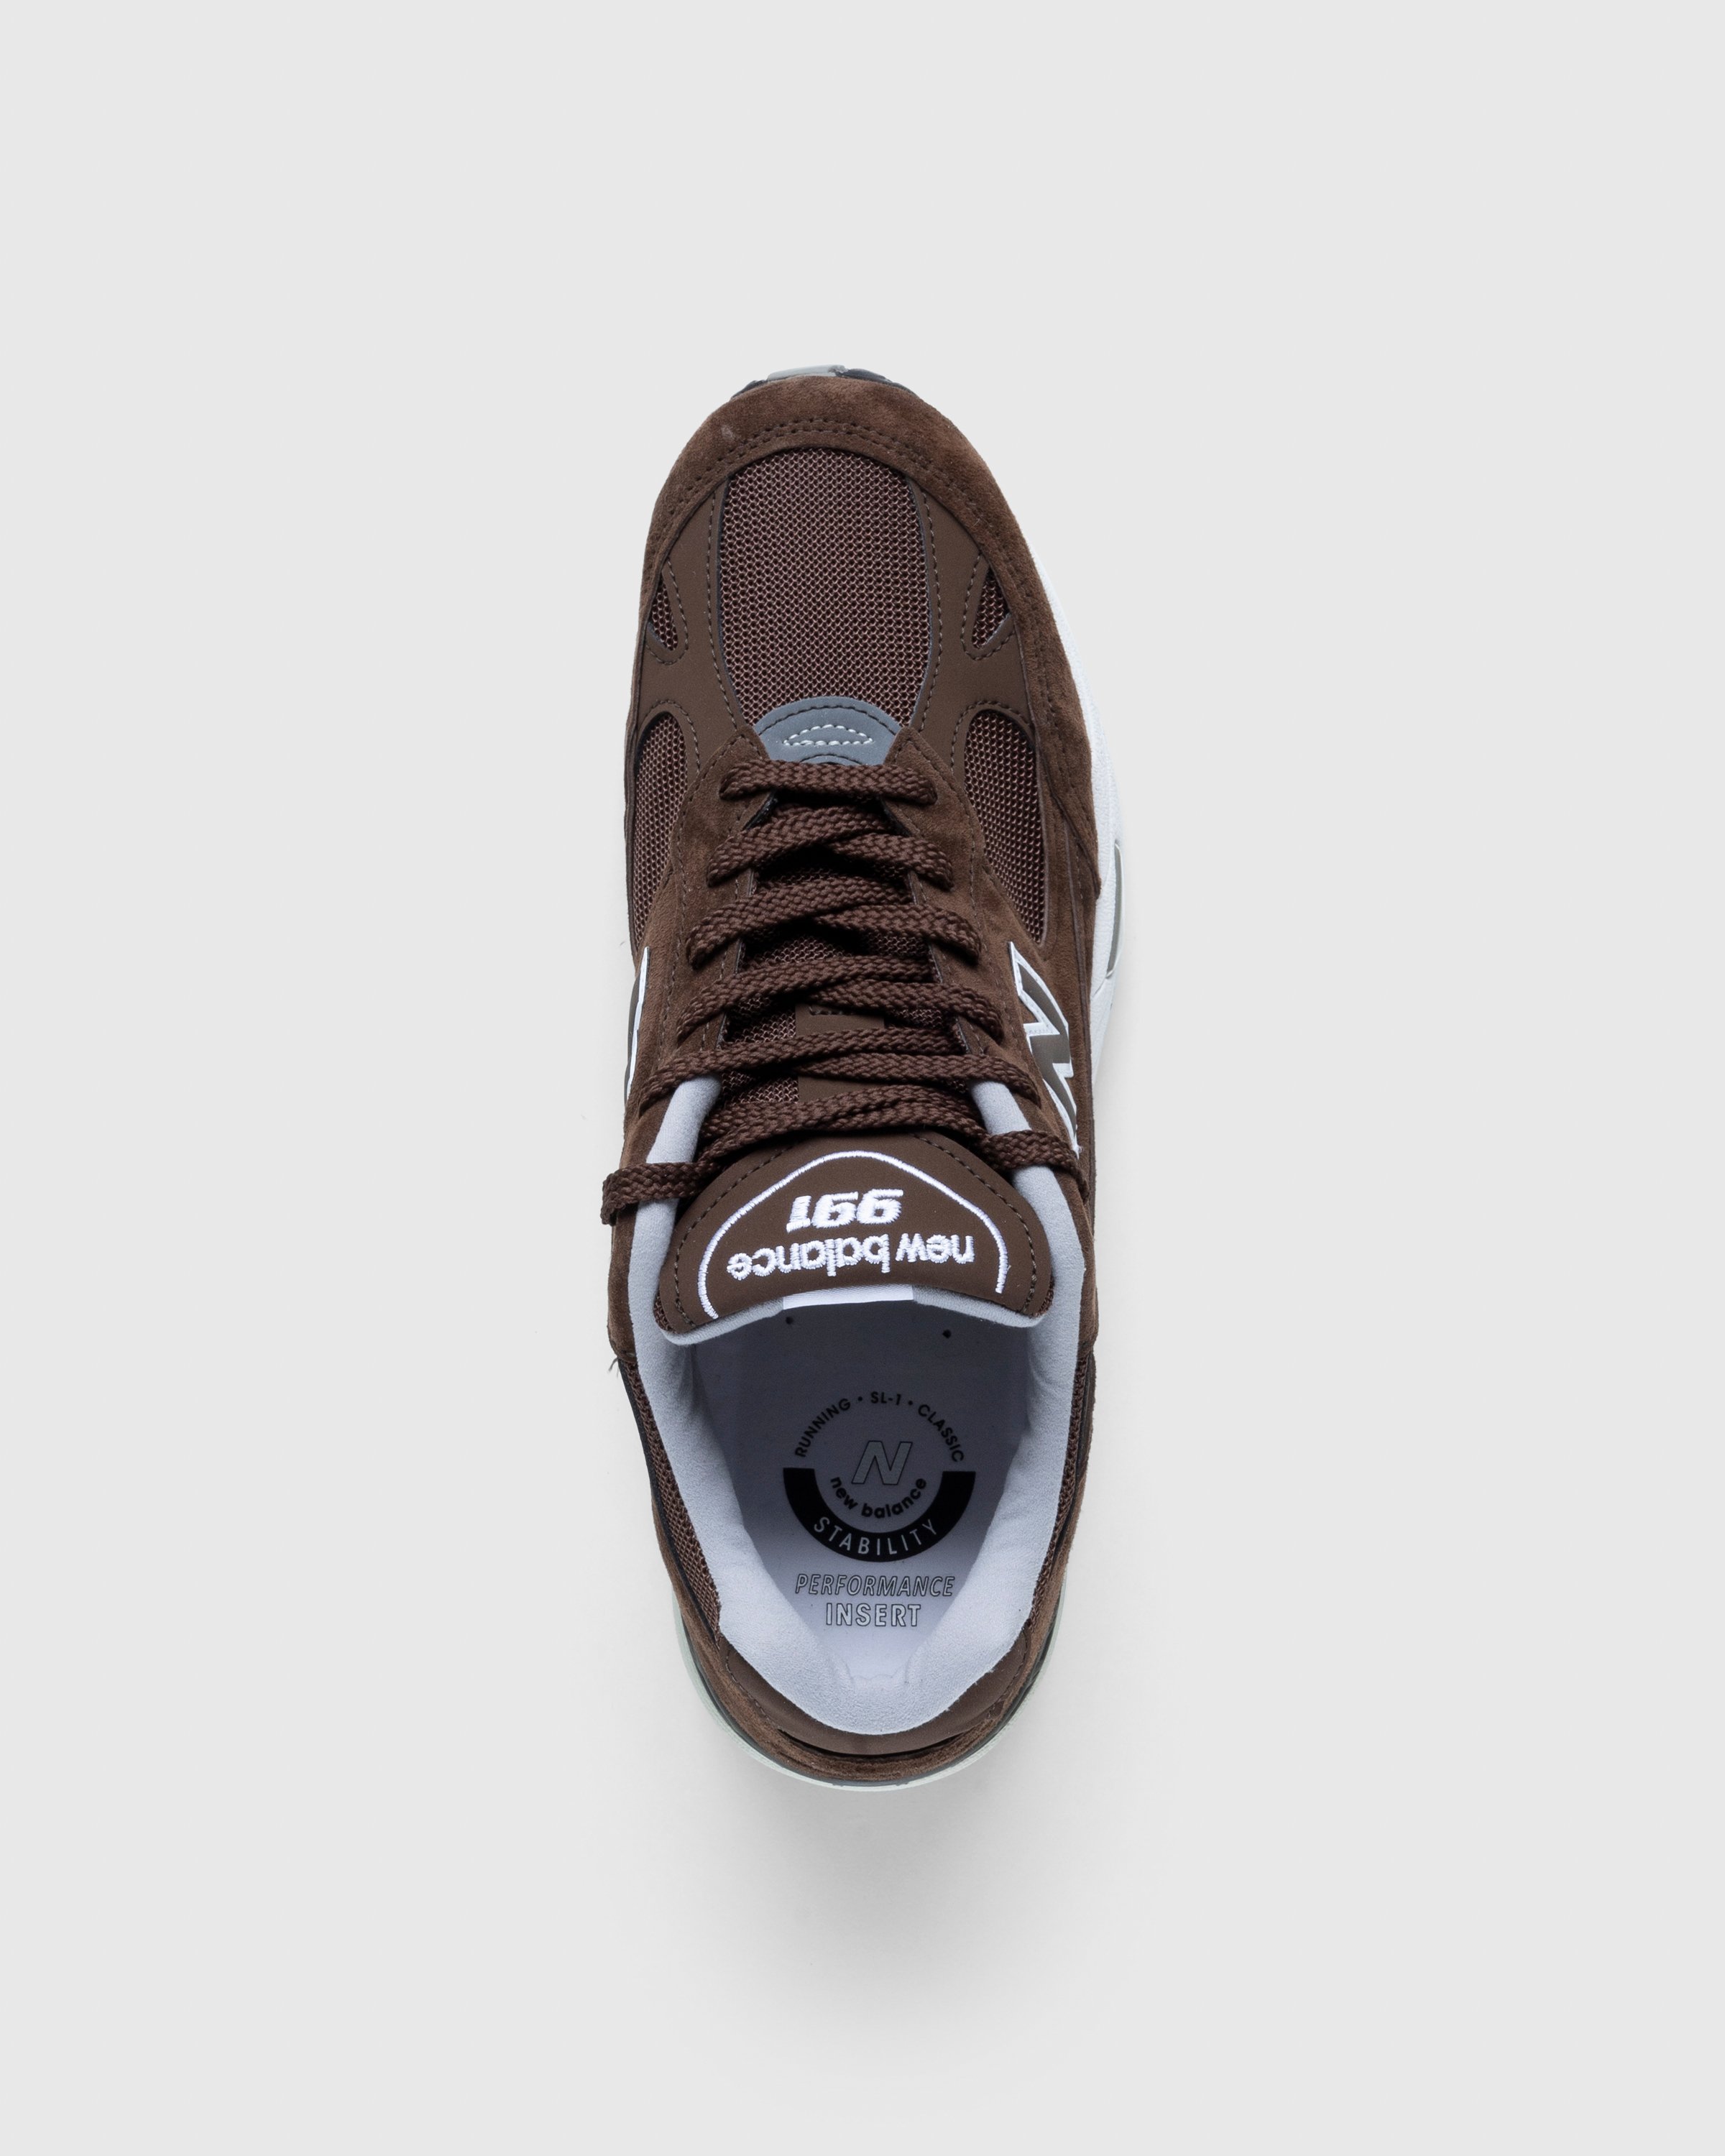 New Balance - M991BGW Brown - Footwear - Brown - Image 5